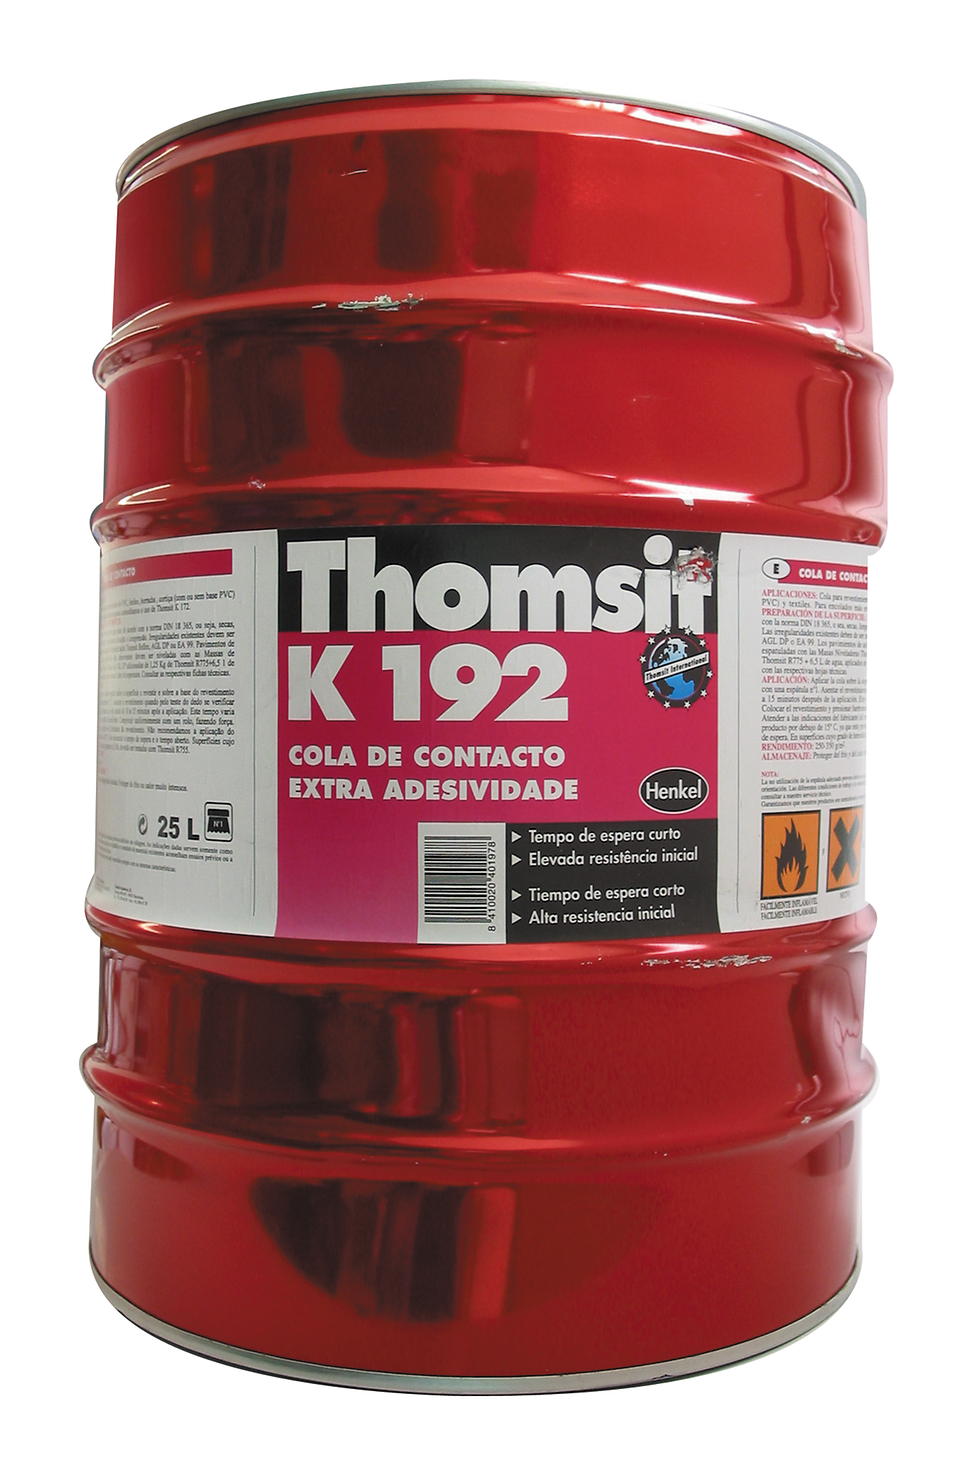 Thomsit K192